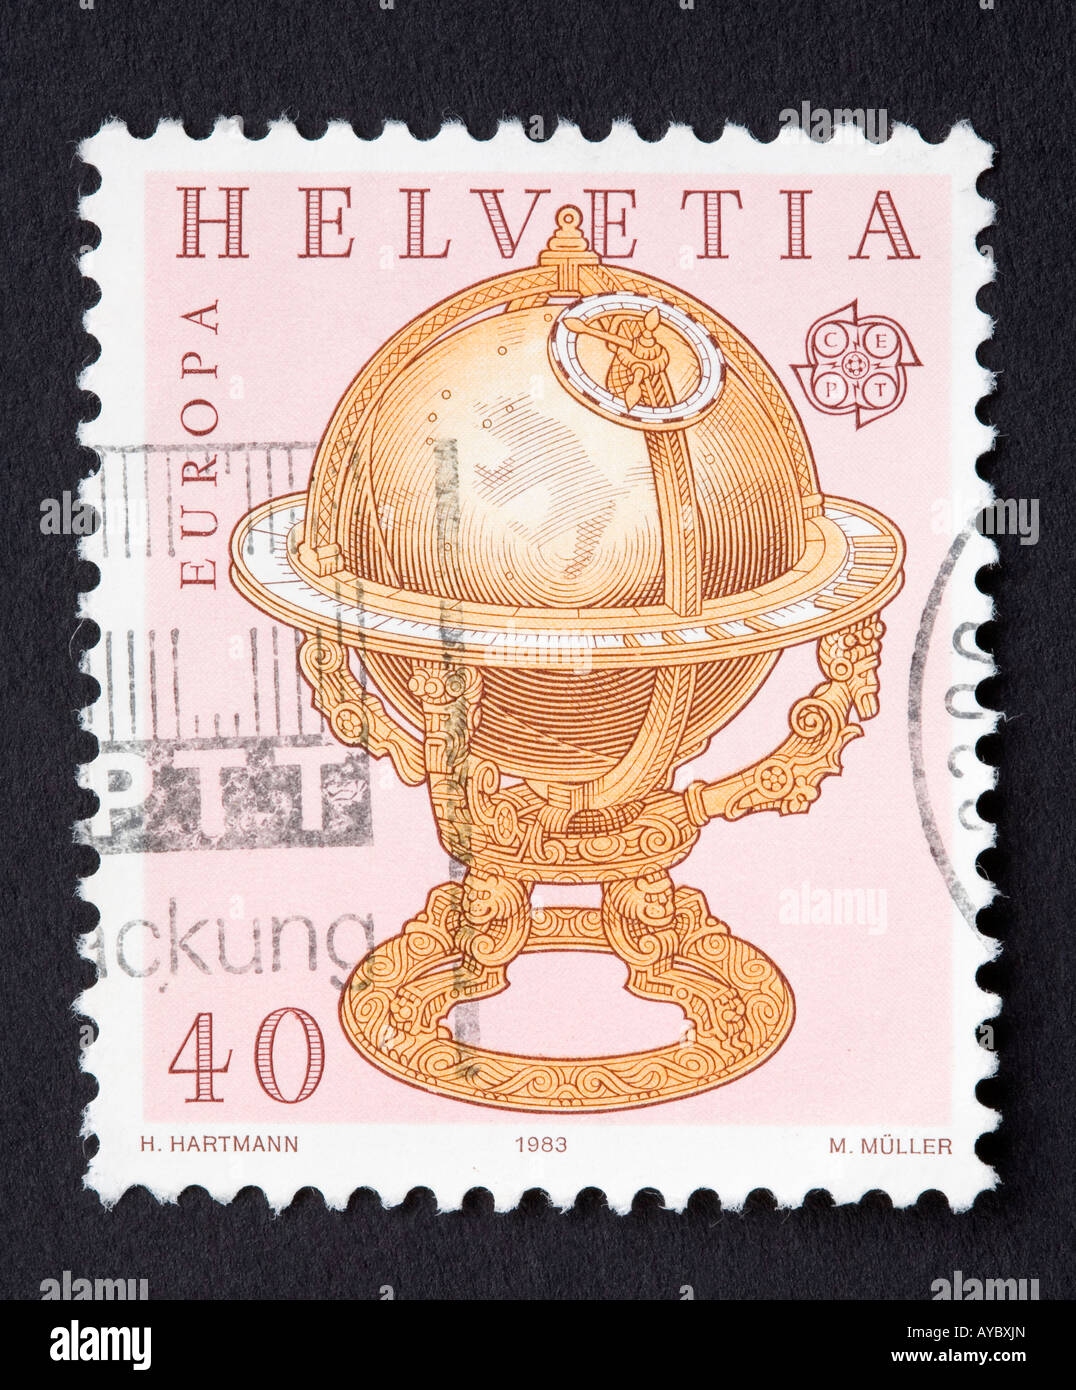 Swiss postage stamp Stock Photo